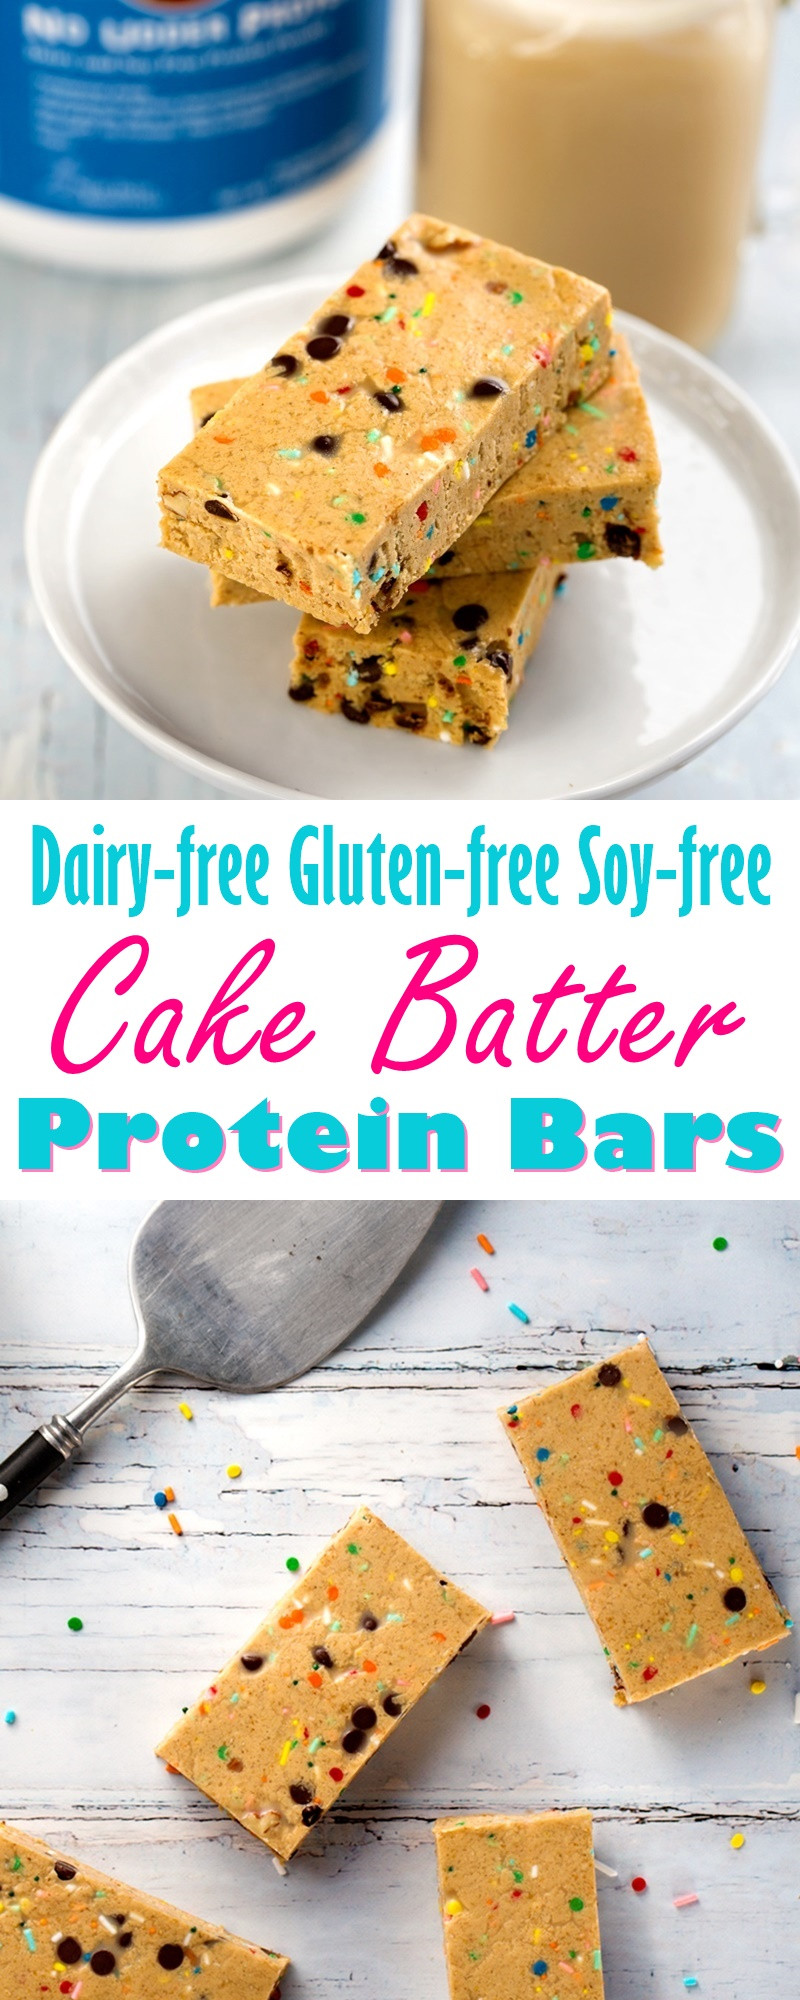 Gluten Free Dairy Free Soy Free Recipes
 Cake Batter Protein Bars Recipe Dairy free Soy free